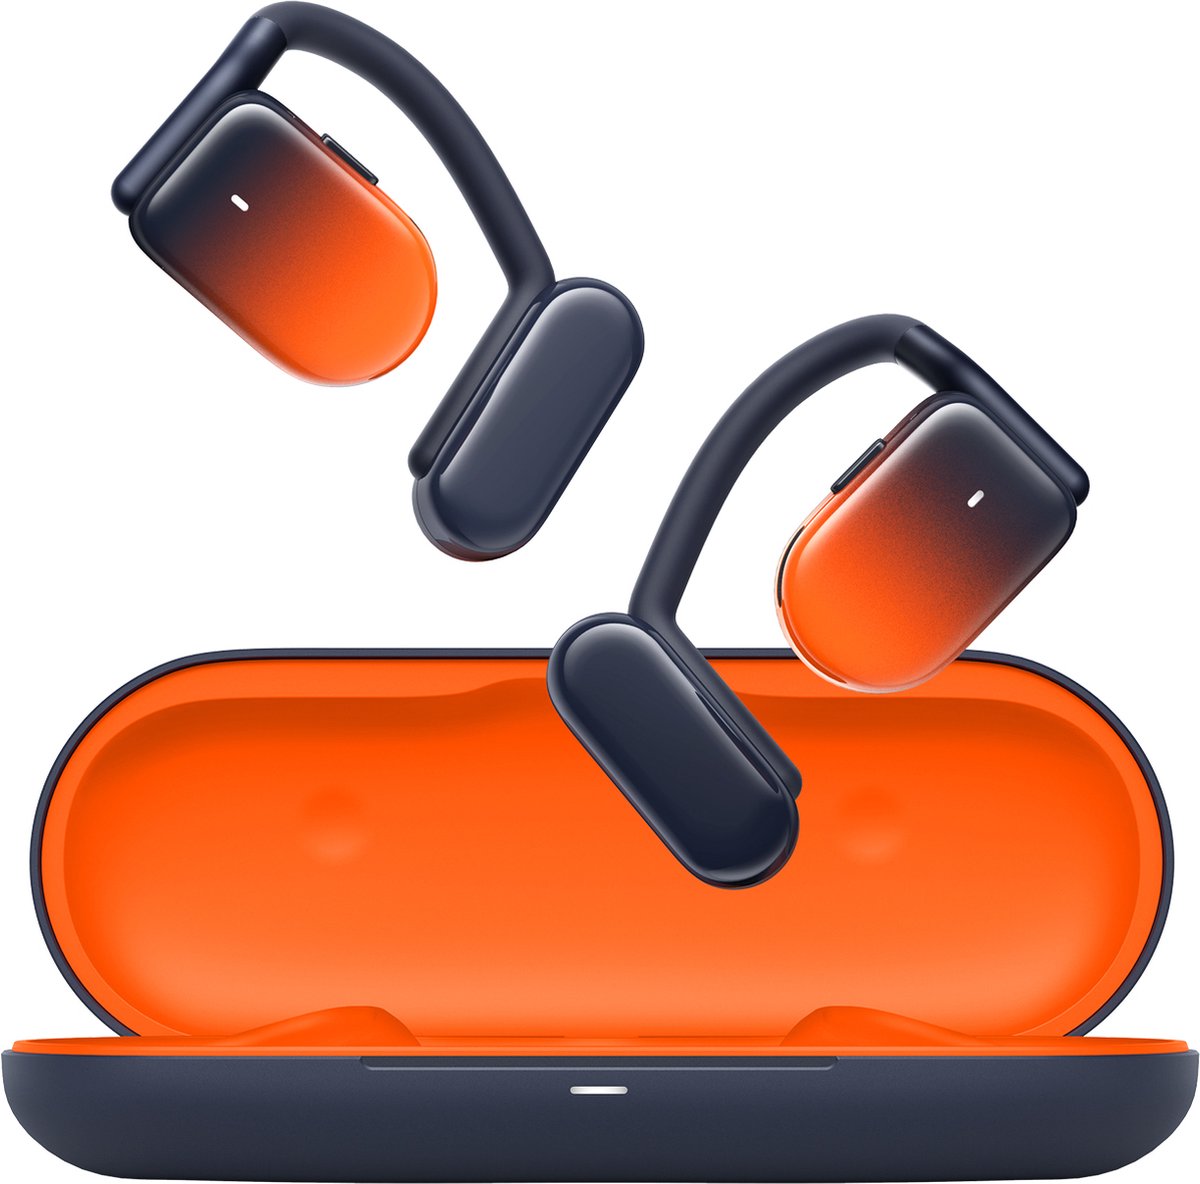 Joyroom Draadloze Oordopjes - Bluetooth 5.3 - 20 uur Afspeeltijd - IPX5 Waterbestendig - Oranje